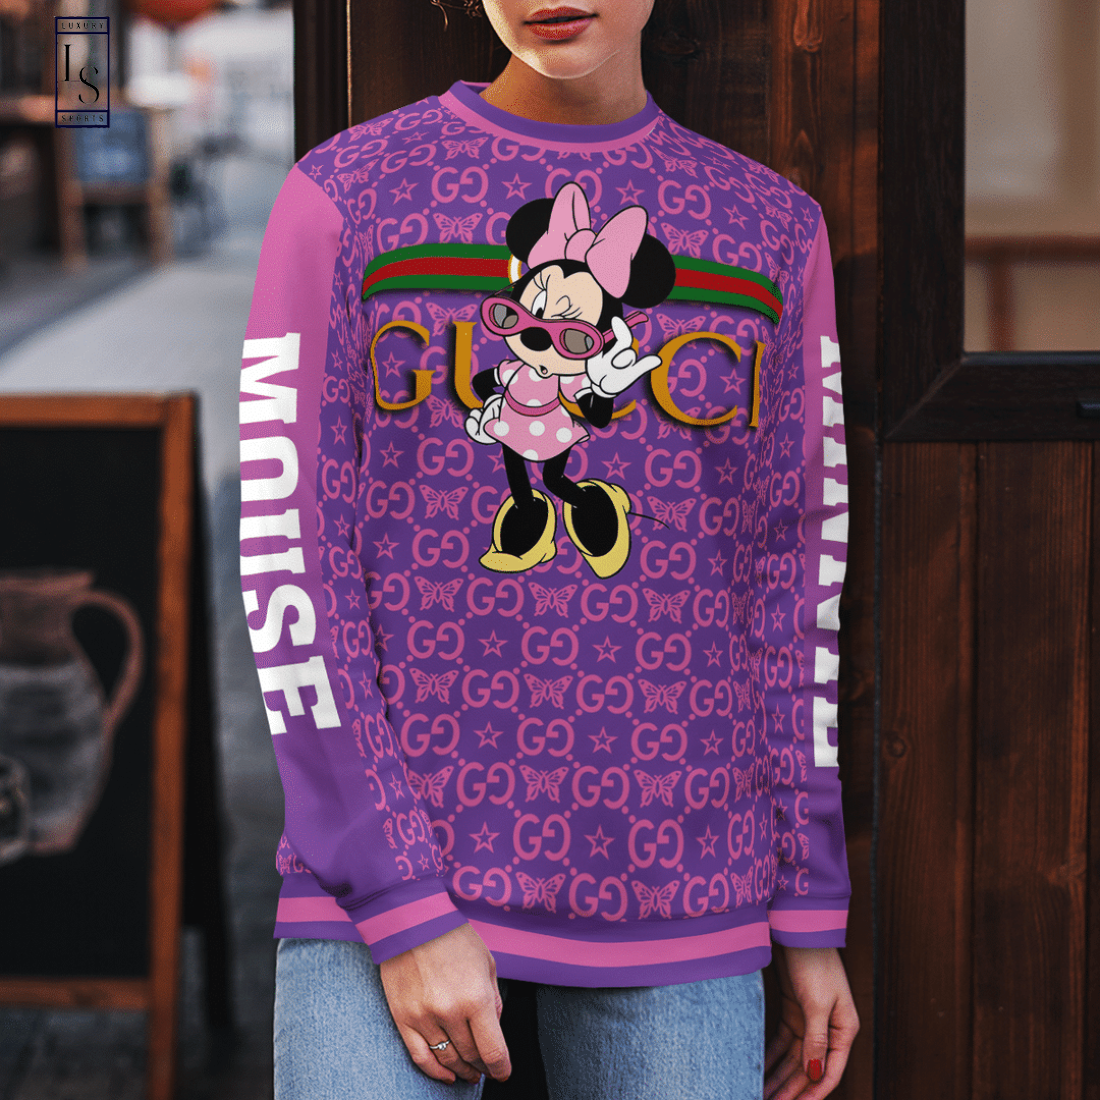 Minnie Mouse Gucci Tshirt 